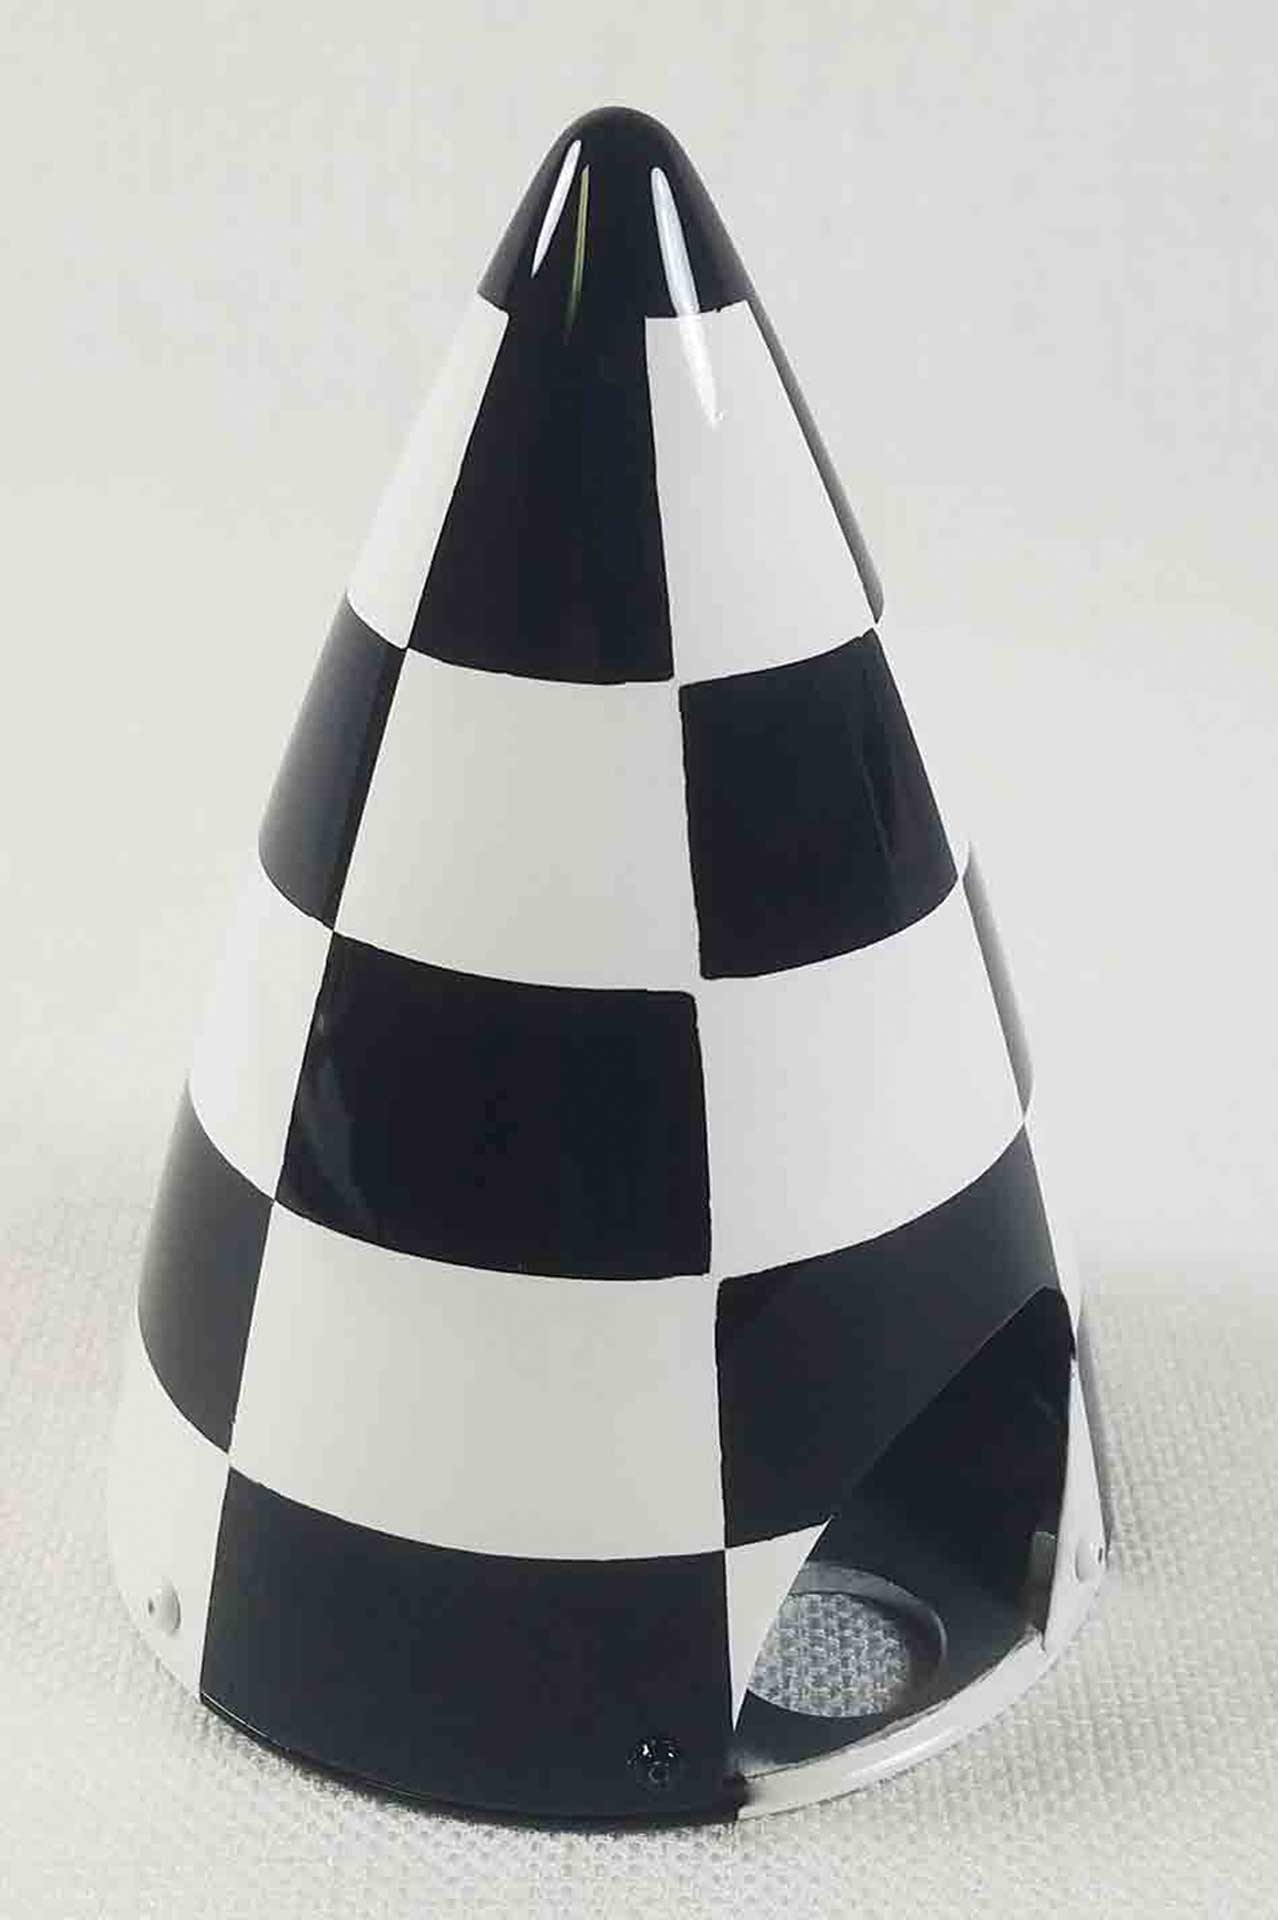 EXTREMEFLIGHT-RC Spinner Carbon 3" (76mm) noir/blanc Motif à damier